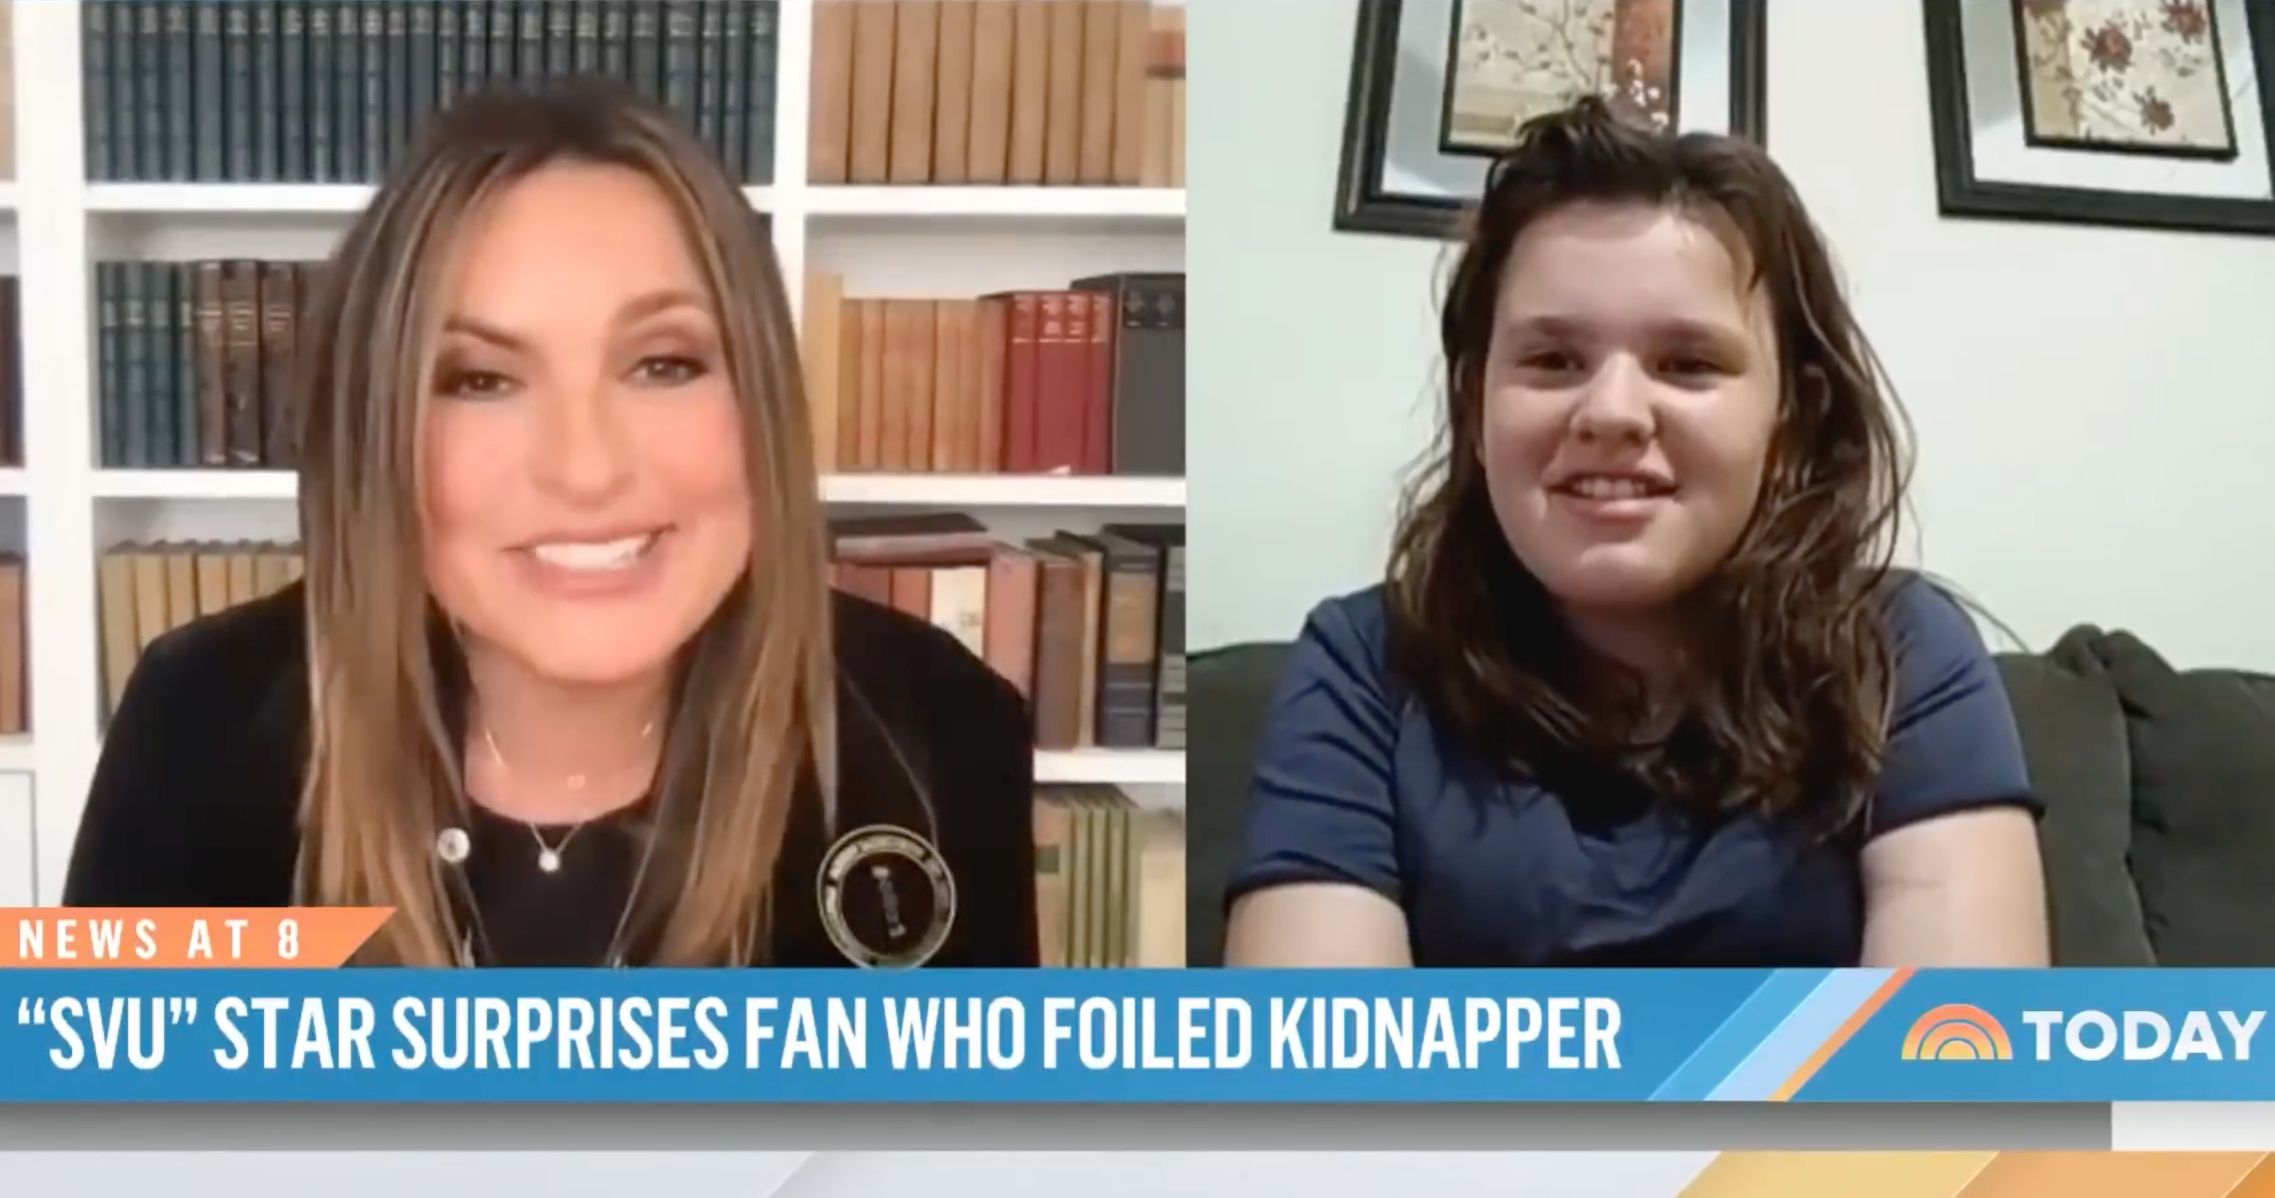 Mariska Hargitay Surprises 11-Year-Old SVU Fan Who Fought Off Attempted Kidnapper